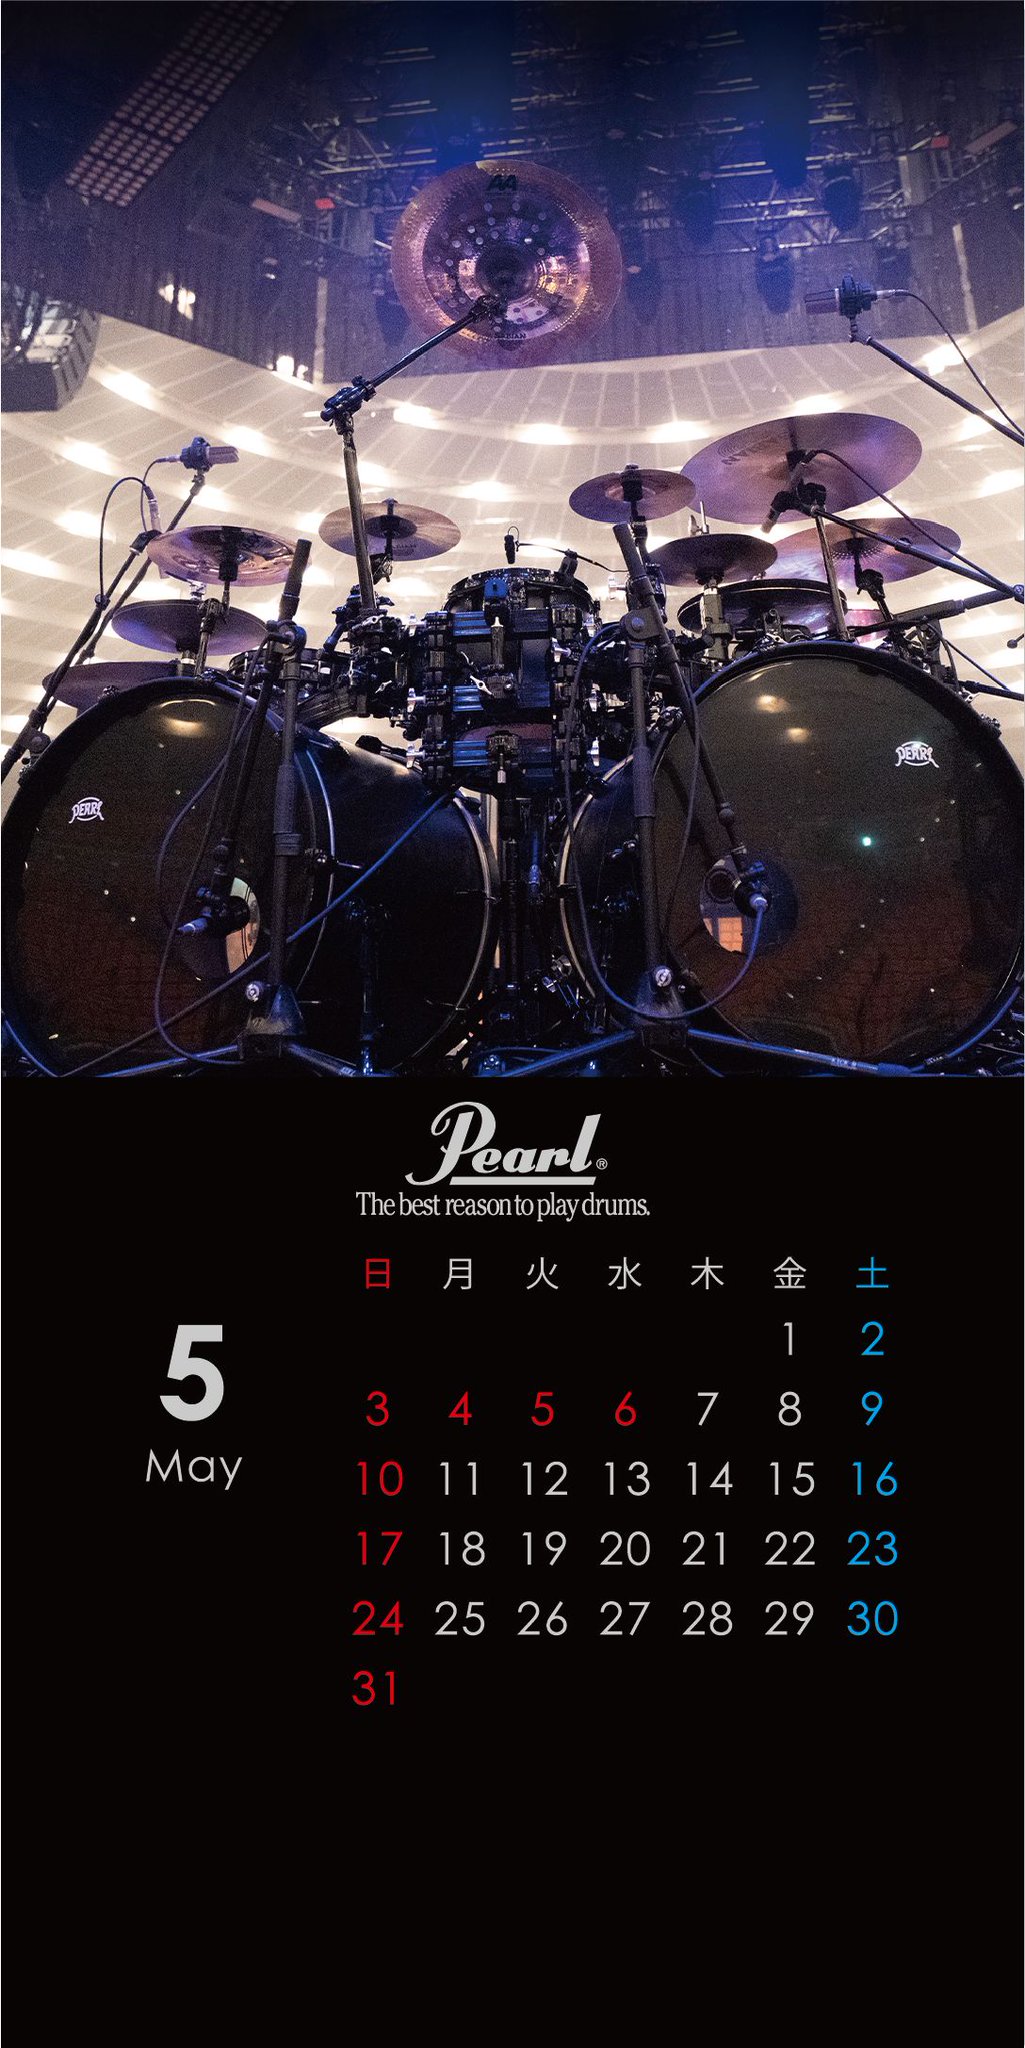 Uzivatel パール楽器製造株式会社 Na Twitteru スマホ壁紙 5月 アーティスト ドラムセット をカレンダーにしたスマホ壁紙を毎月1日に配信致します 5月はyukihiroさん L Arc En Ciel のドラムセットです